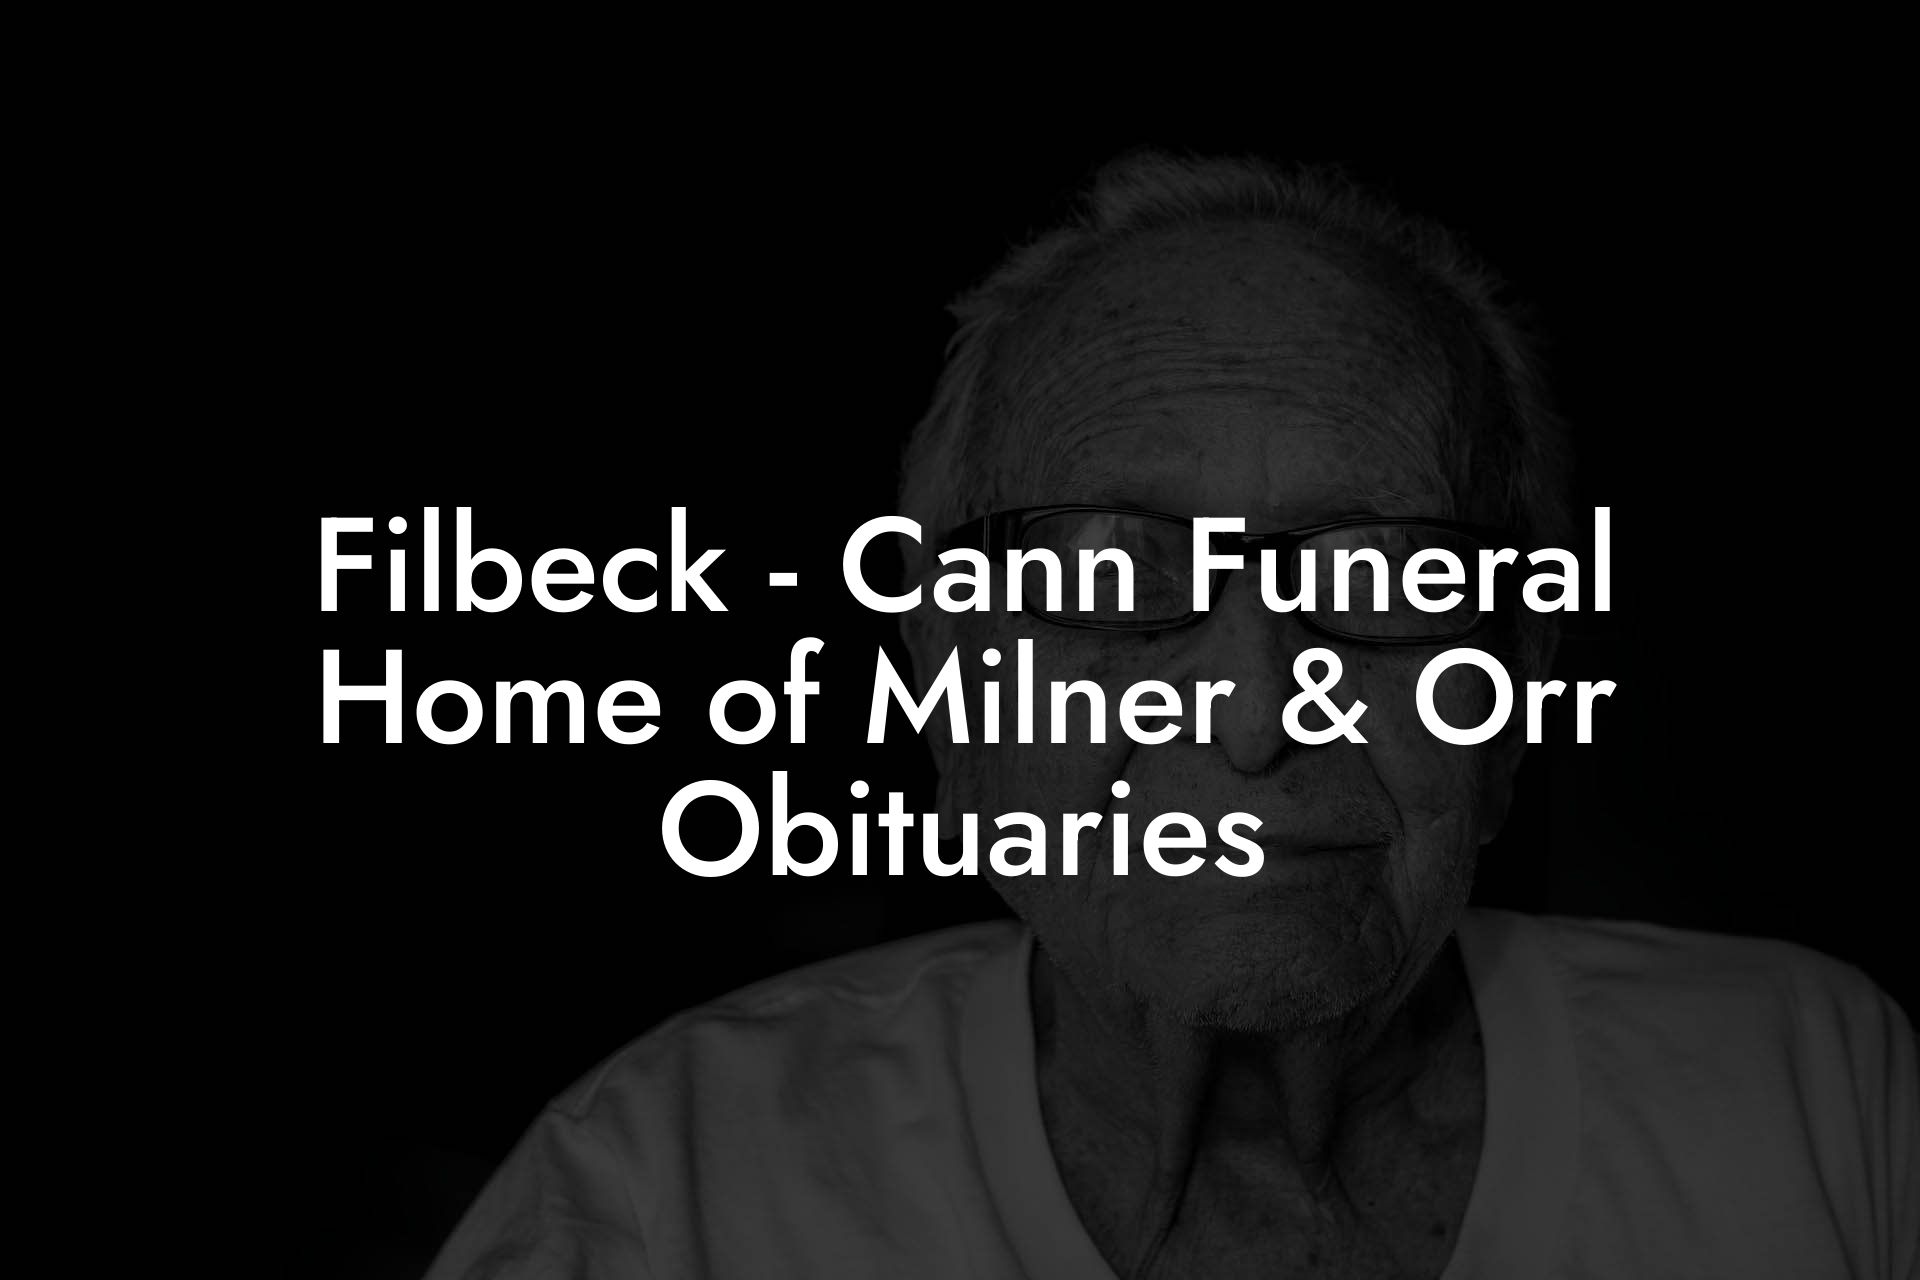 Filbeck - Cann Funeral Home of Milner & Orr Obituaries